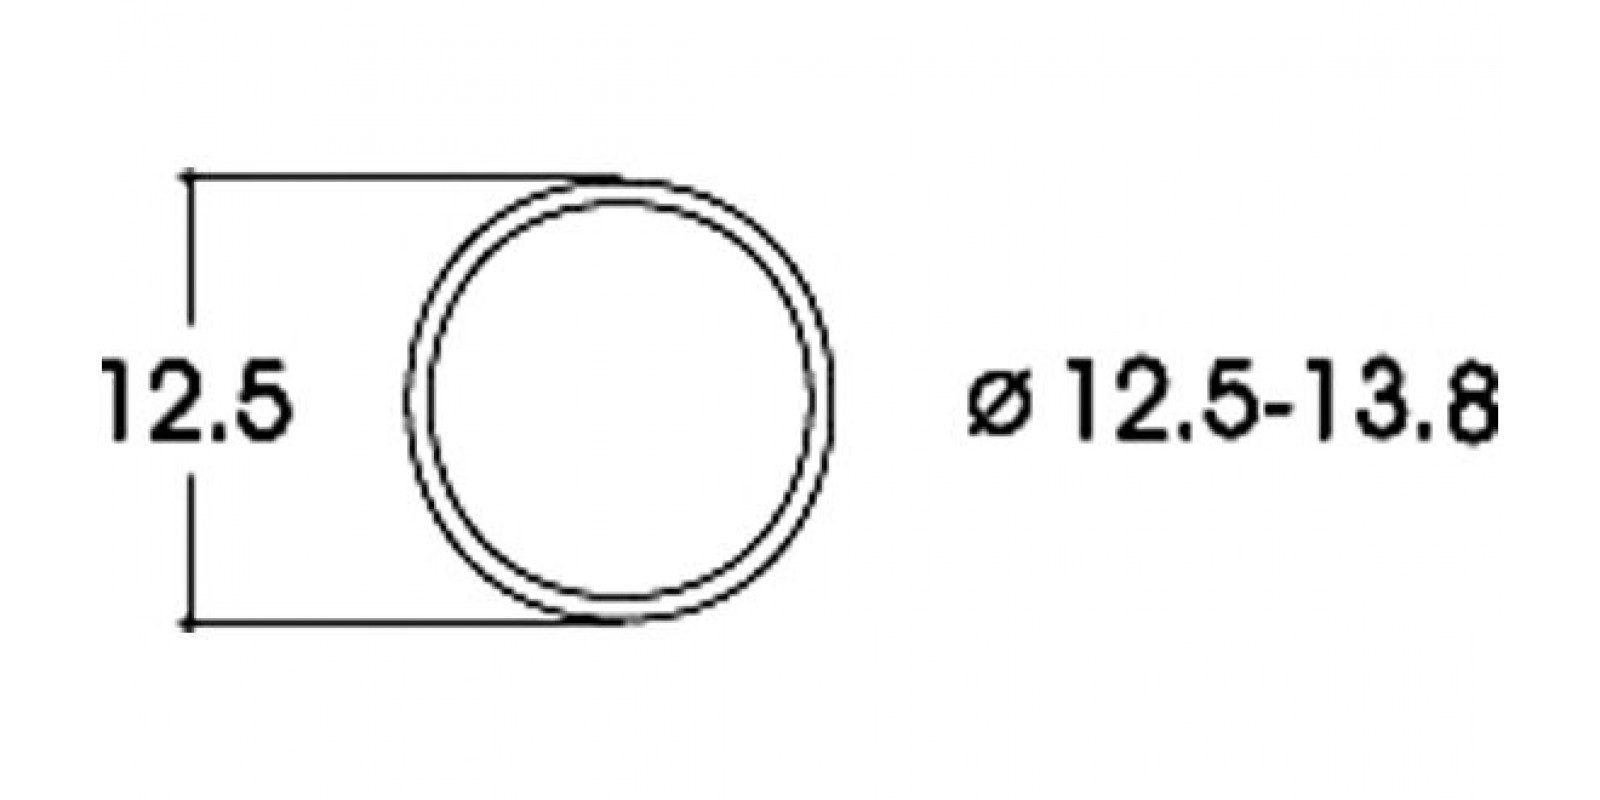 RO40066 - Adhesive ring set, 12.5 - 13.8 mm diameter (10pcs)